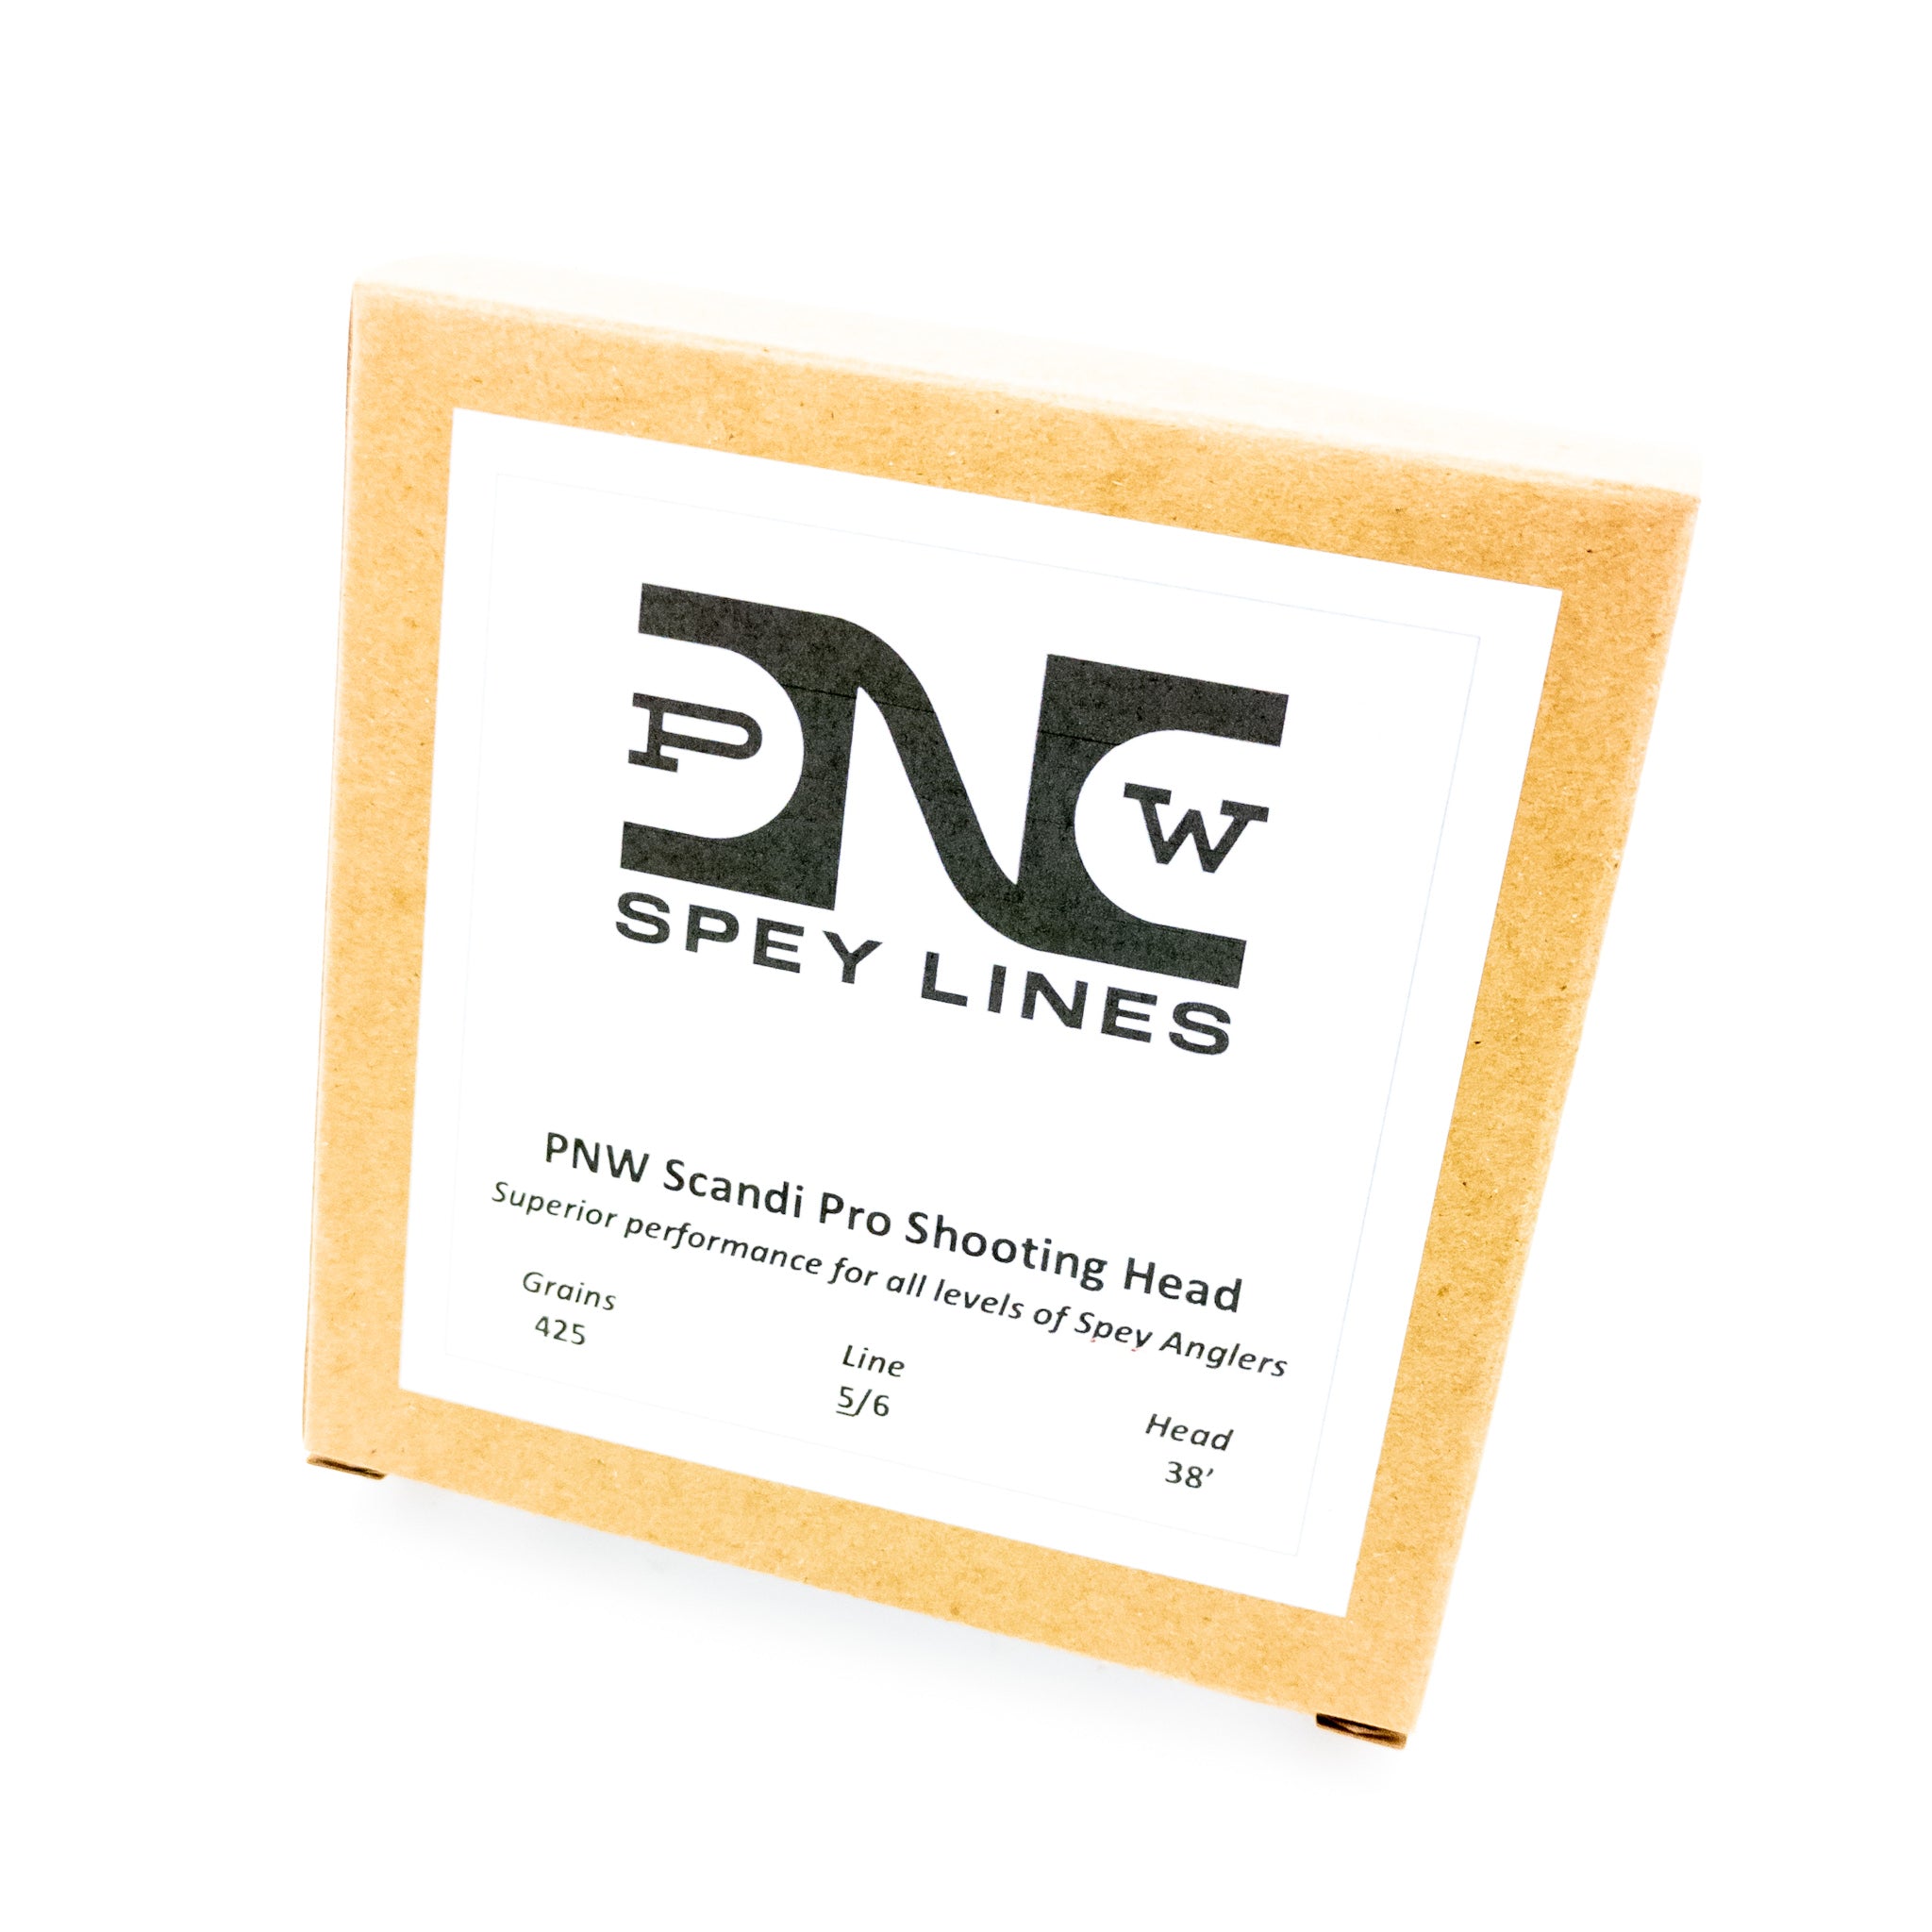 PNW Spey Lines Scandi Pro Shooting Head